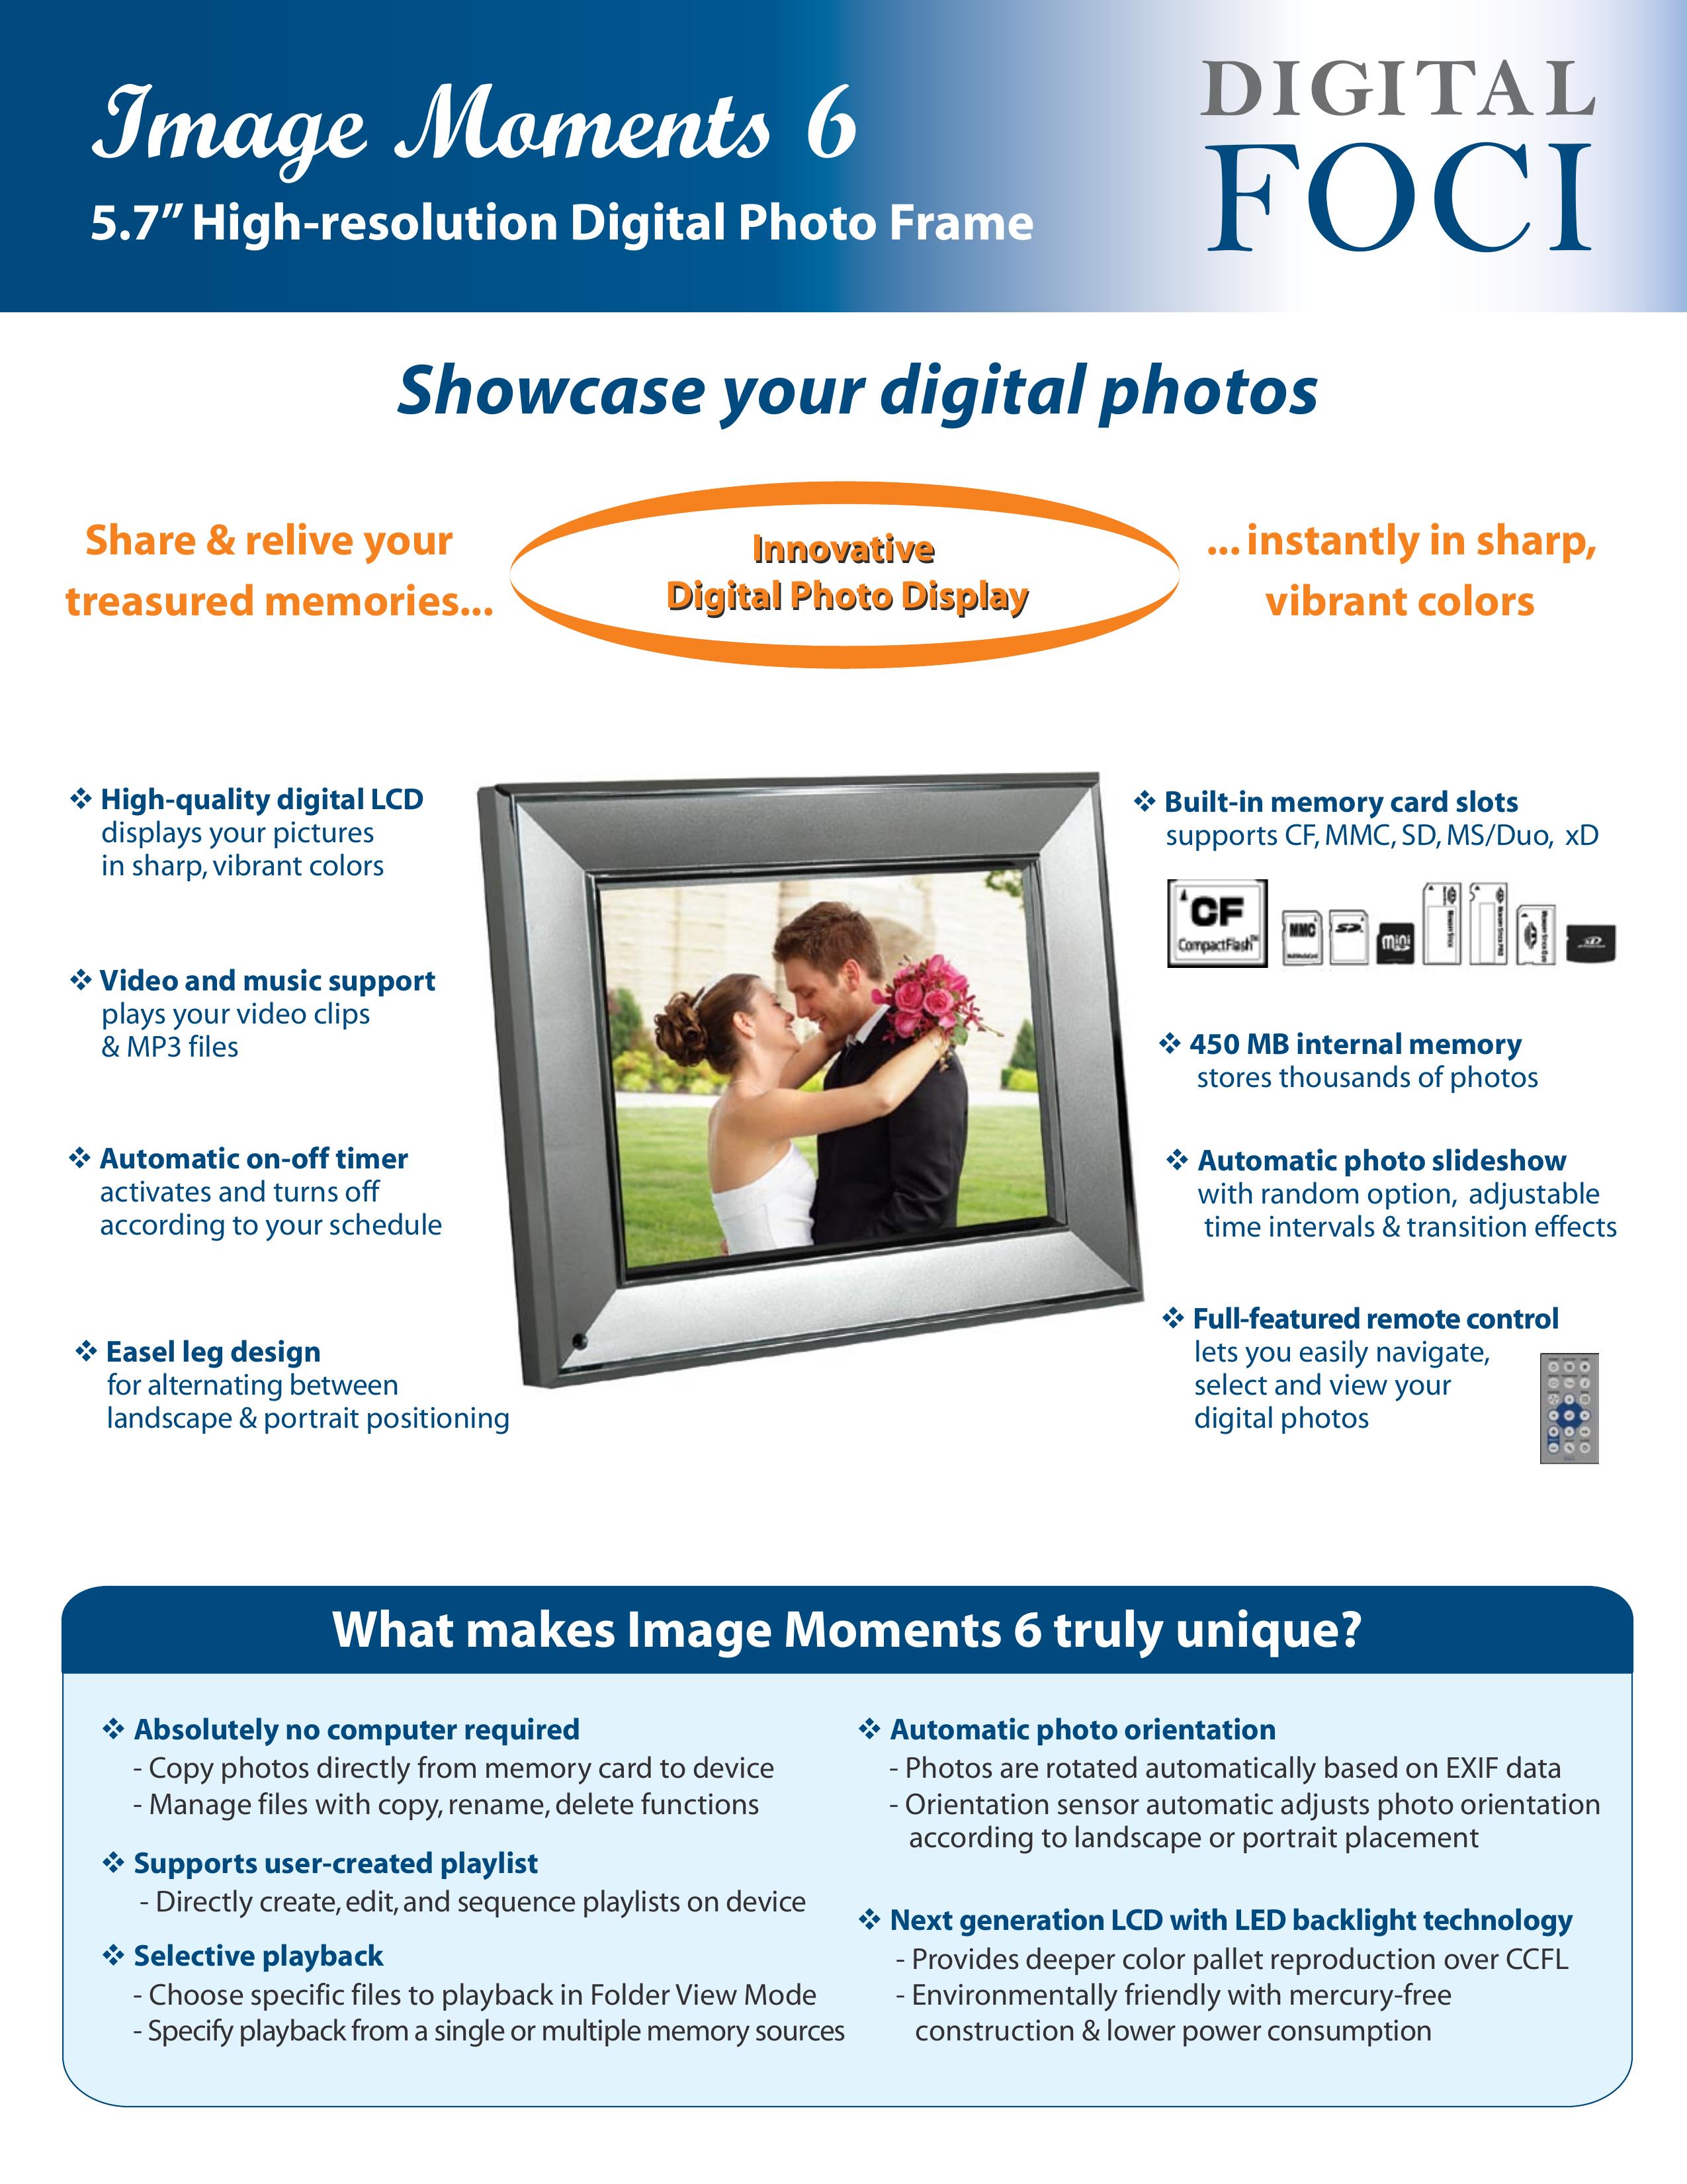 Digital Foci Image Moments 6 Digital Photo Frame User Manual